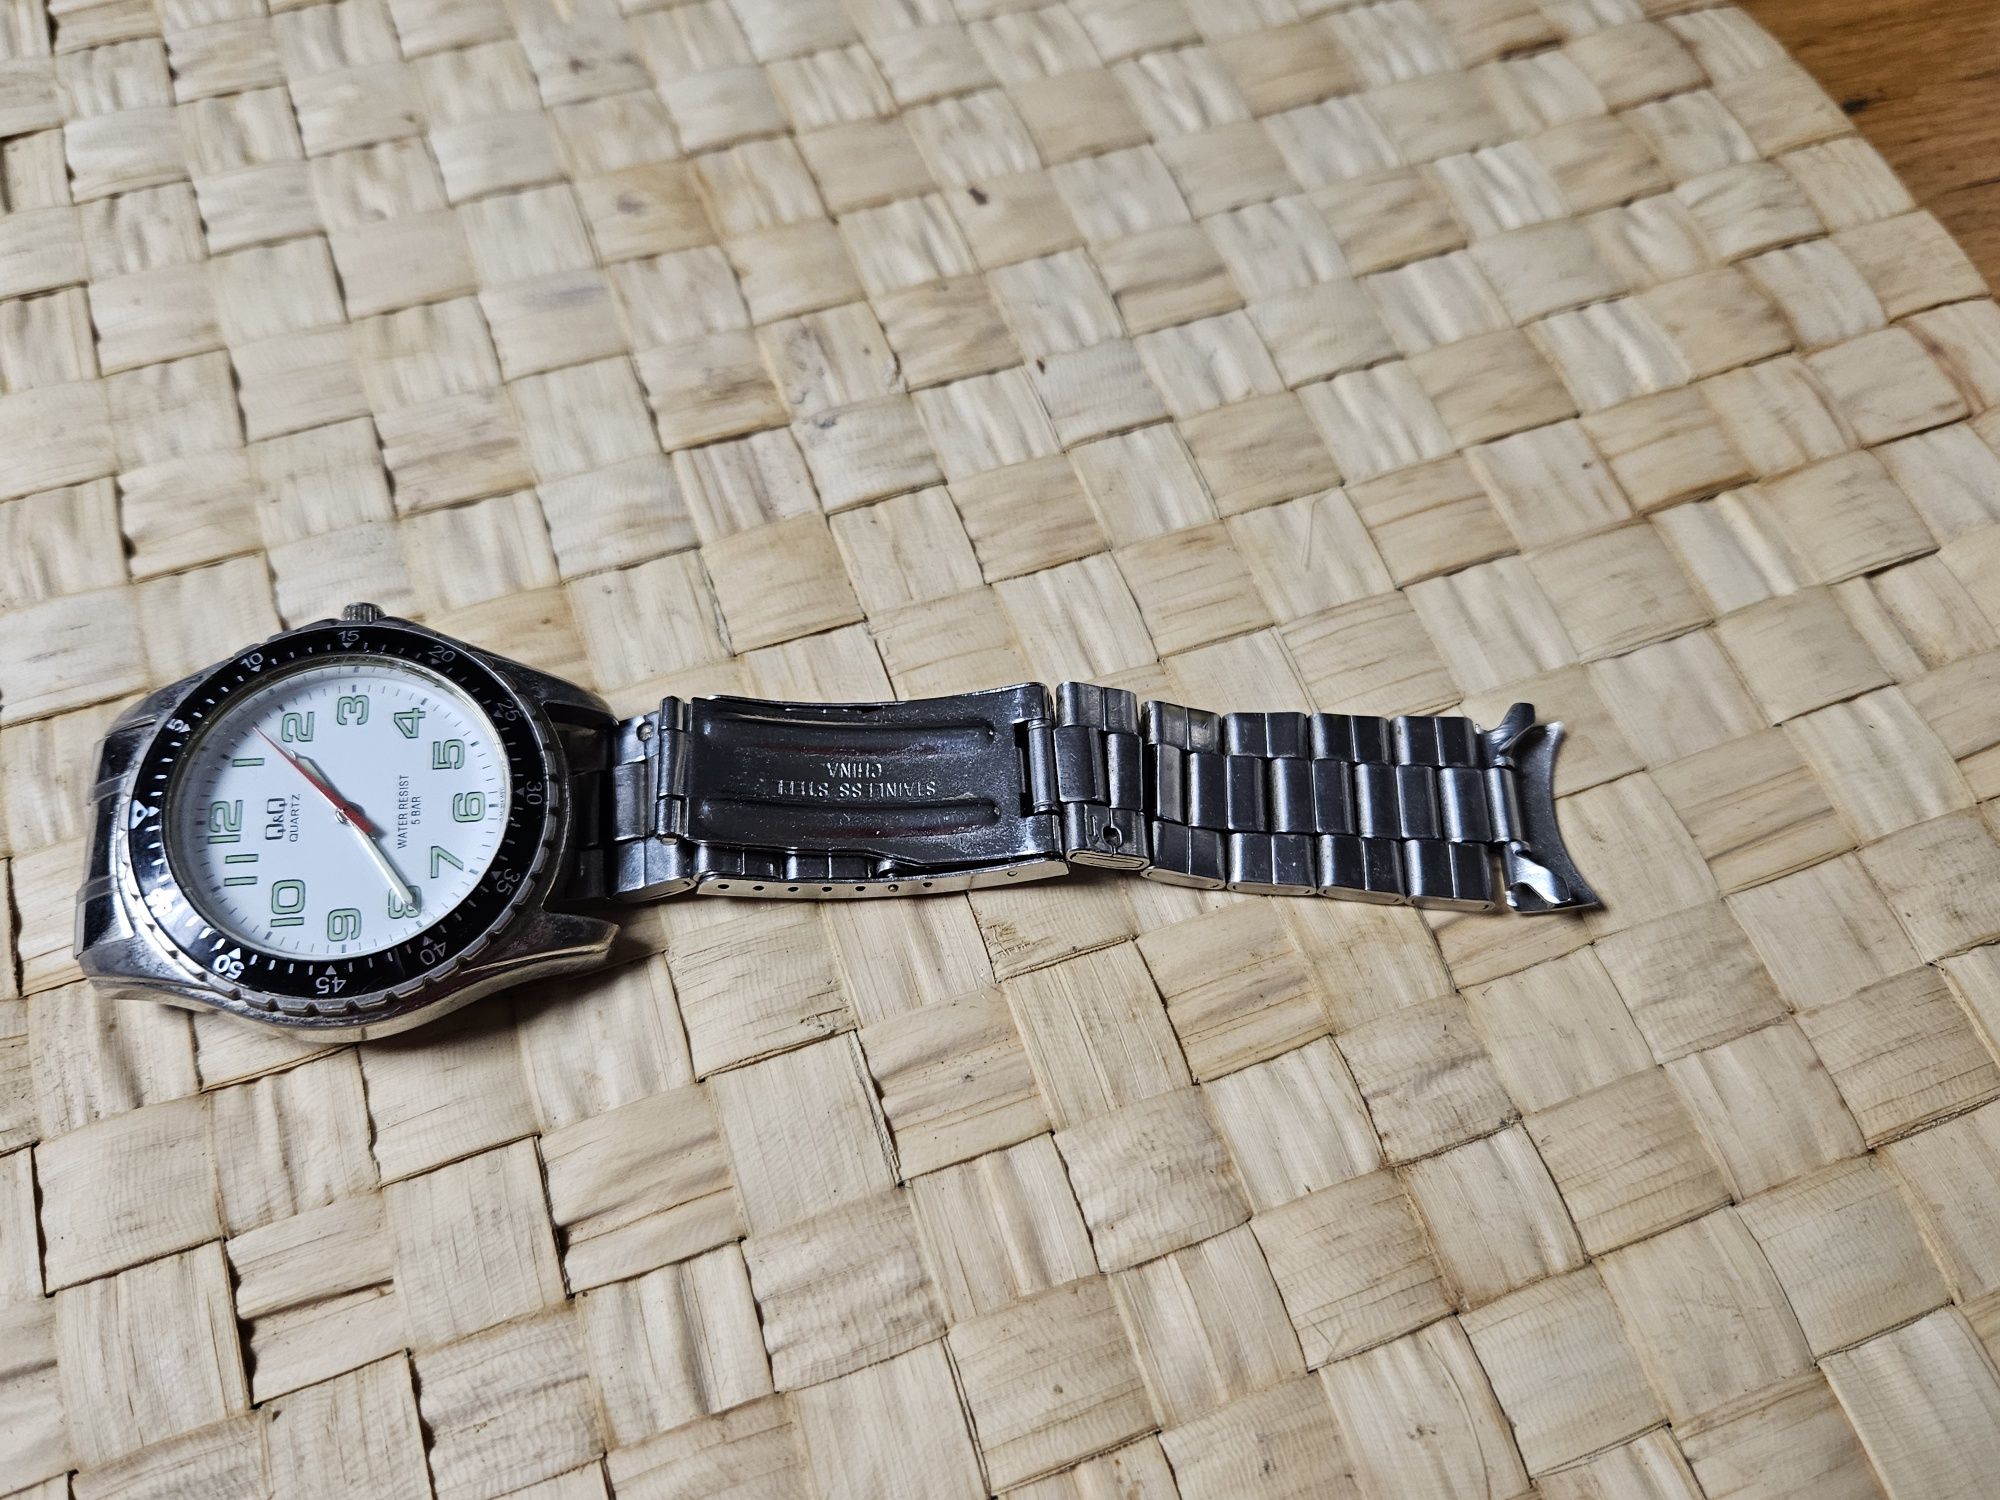 Zegarek  Quartz  z bransoletą